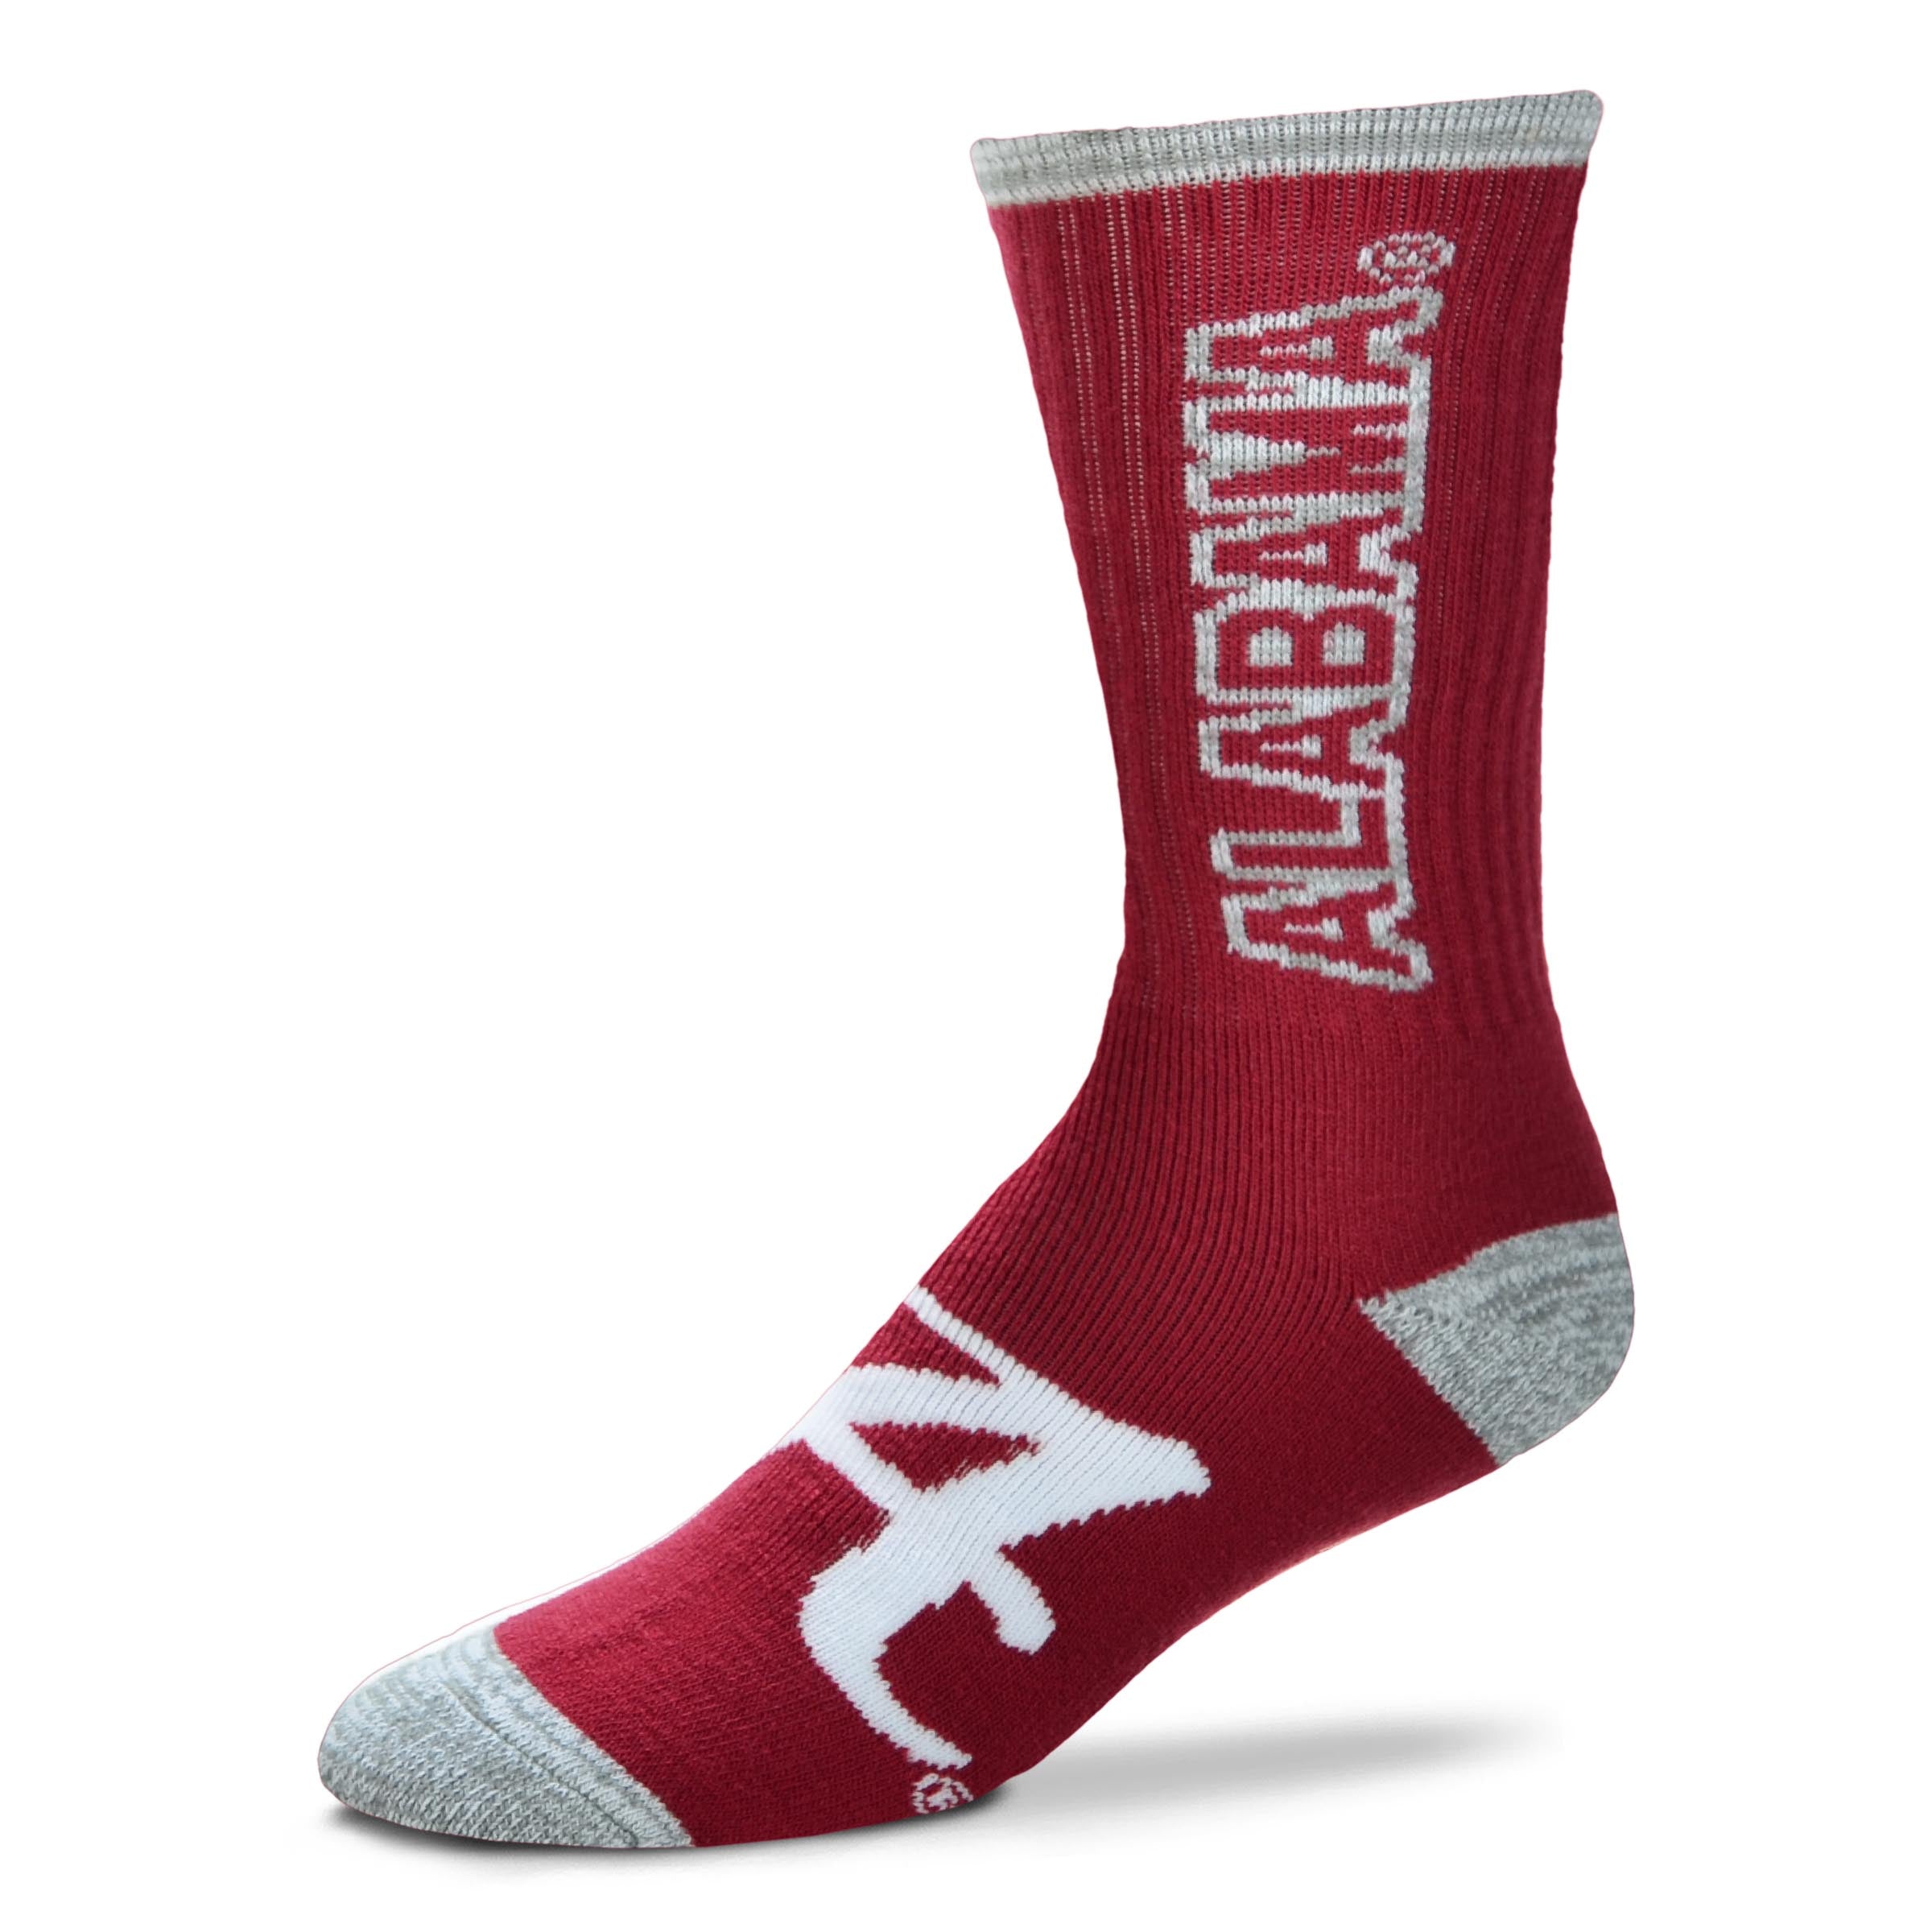 Alabama Crimson Tide Crush Socks Large - $10.00